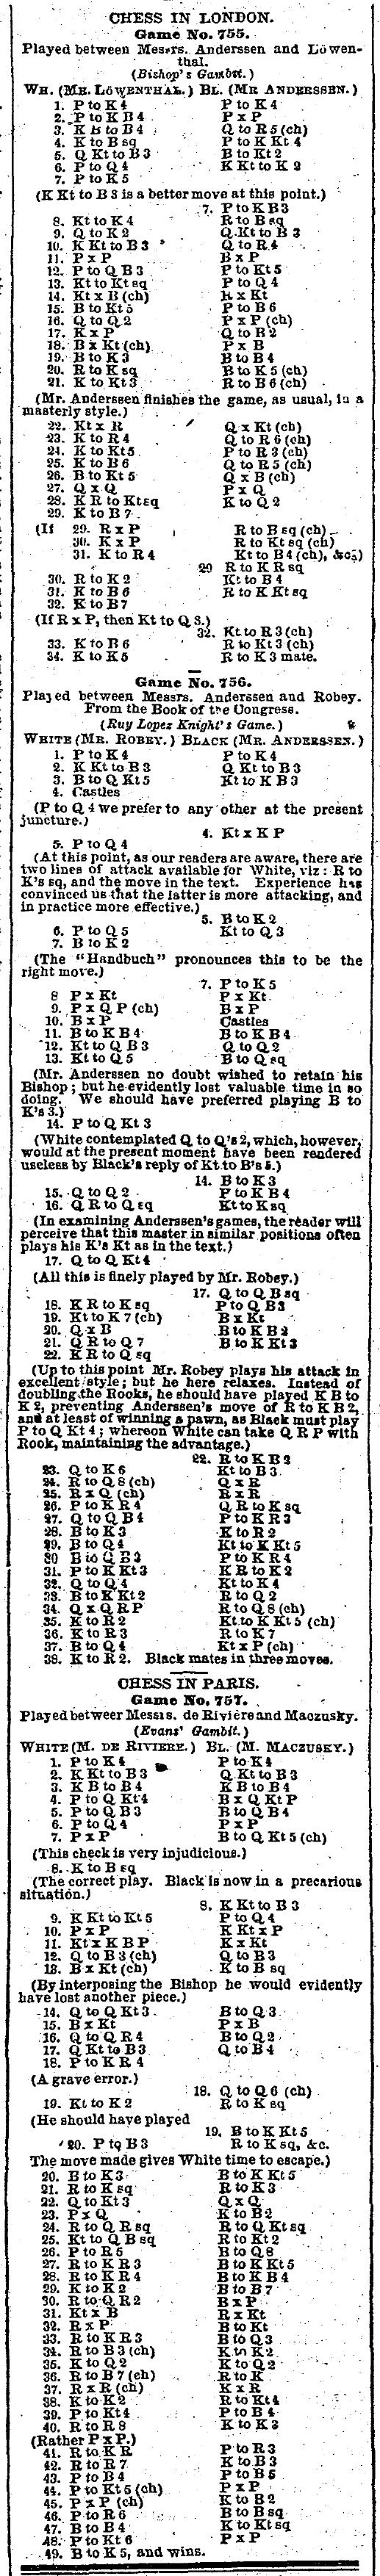 1864.04.30-02 Philadelphia Daily Evening Bulletin.jpg